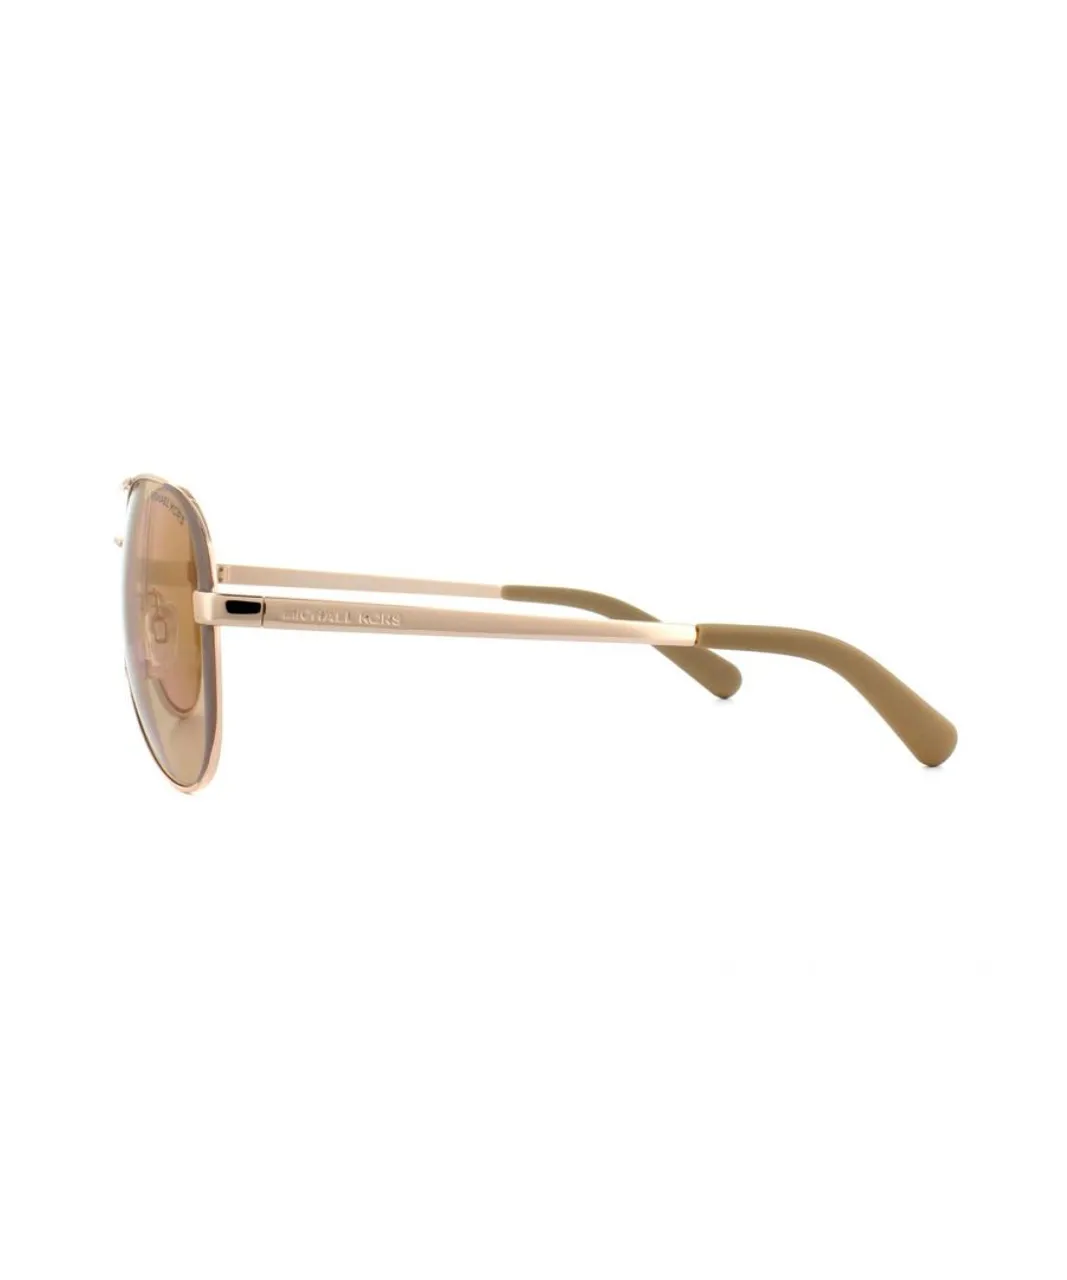 Michael Kors Womens Sunglasses Chelsea 5004 1017R1 Polished Rose Gold Mirror Metal - One